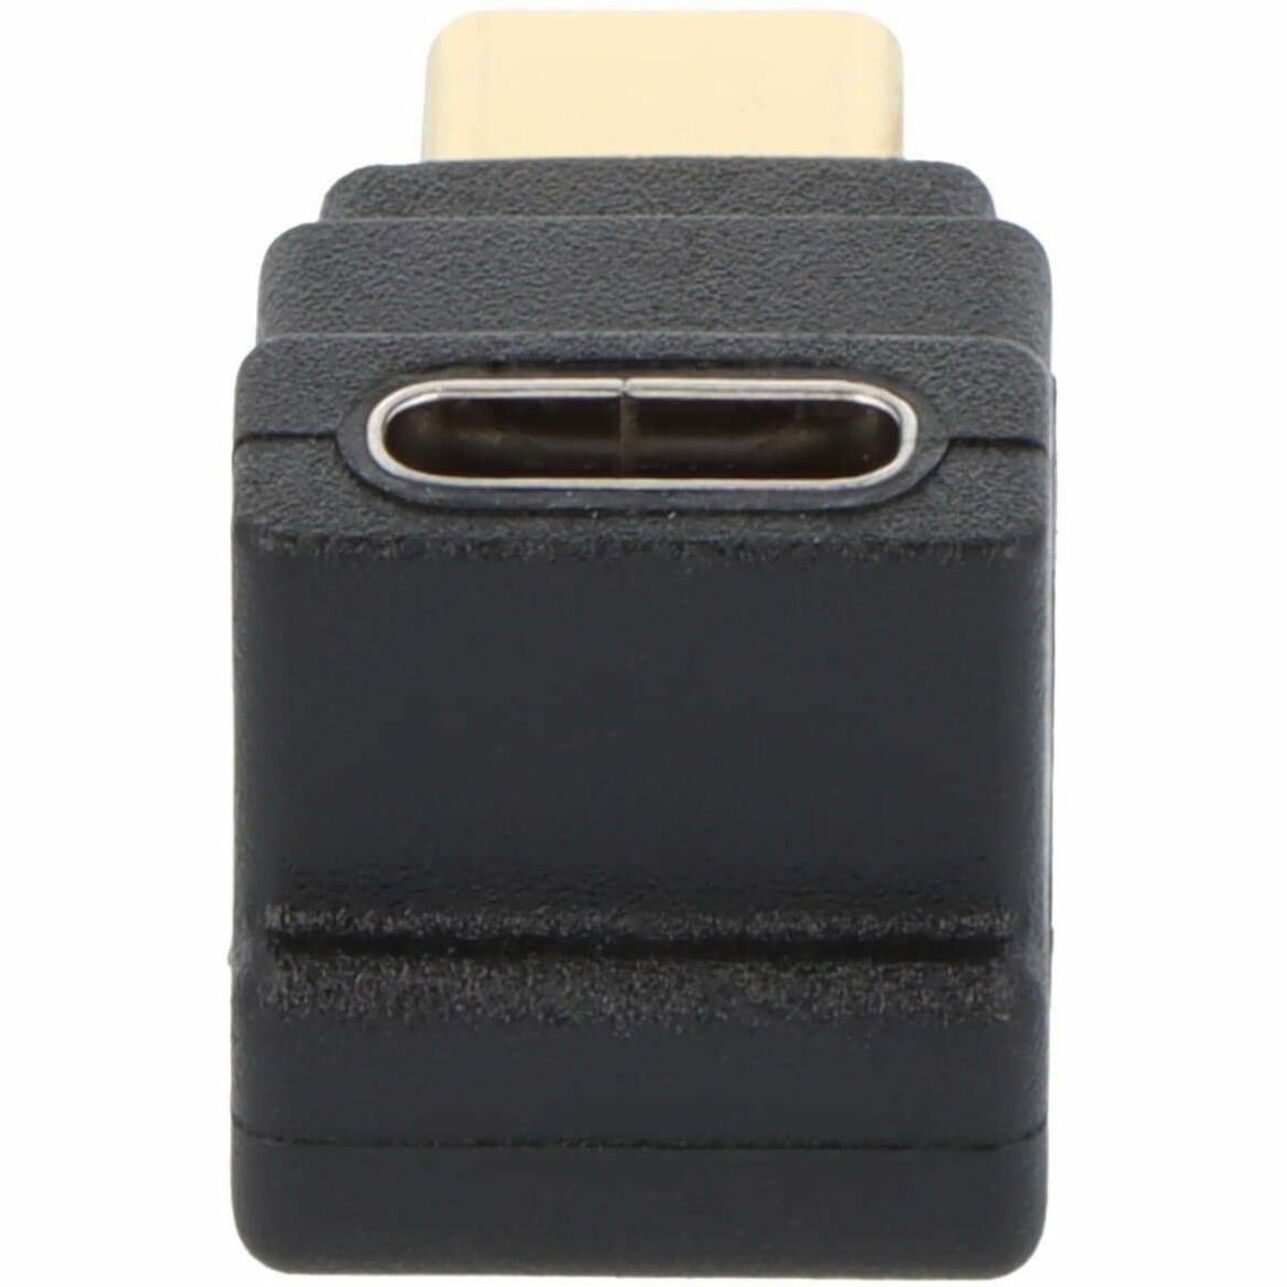 VisionTek 901431 USB-C Data Transfer Adapter, 90° Angled Connector